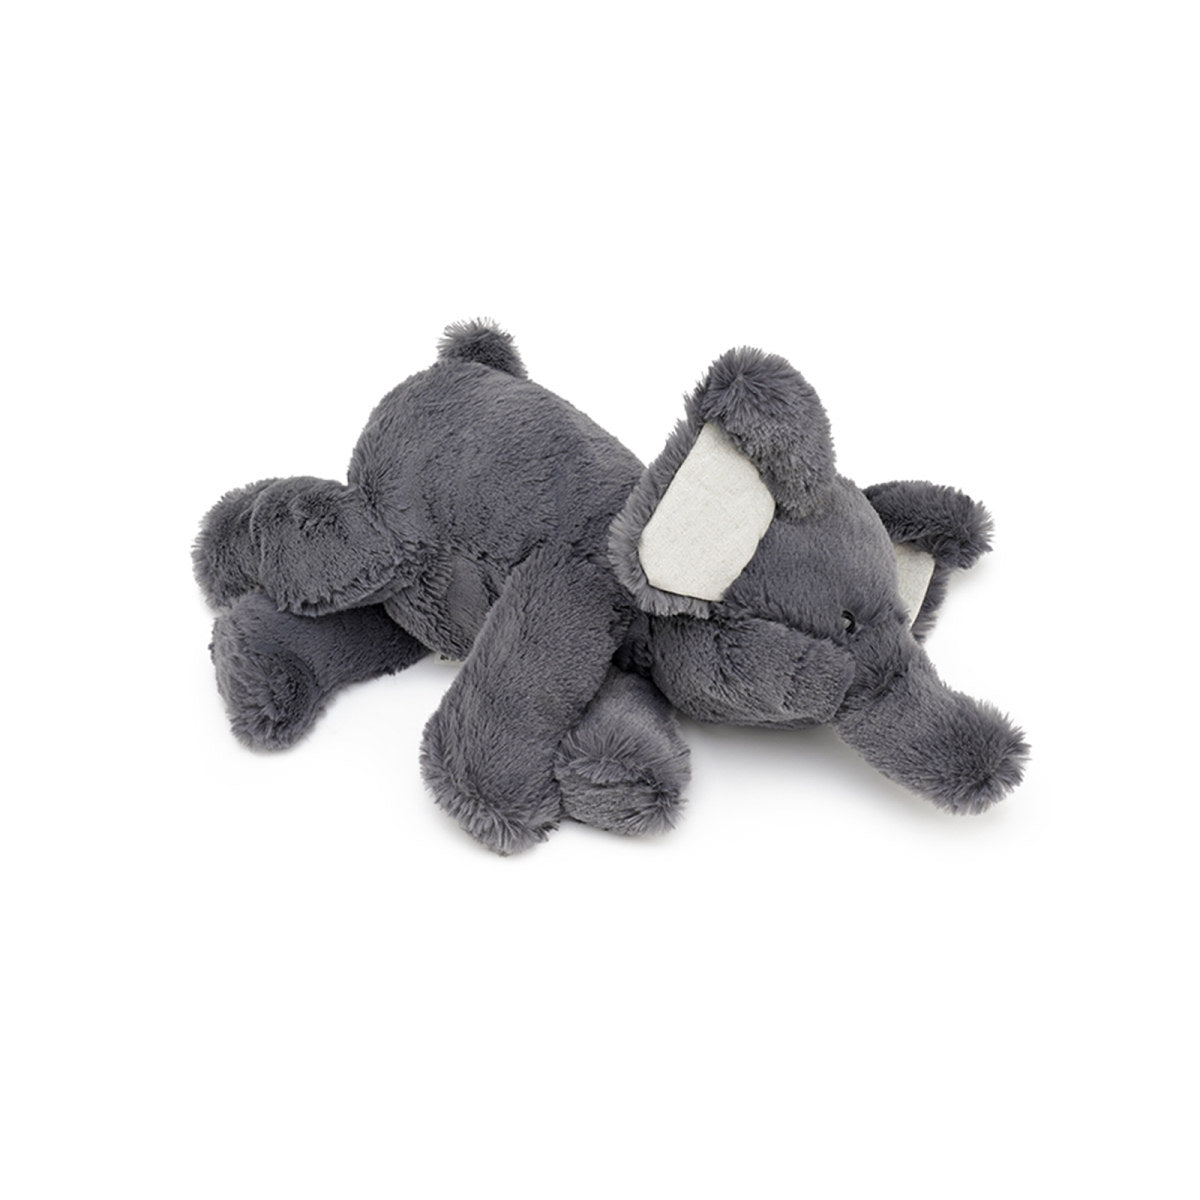 Lazy Elephant Charcoal Plush Doll - 0cm